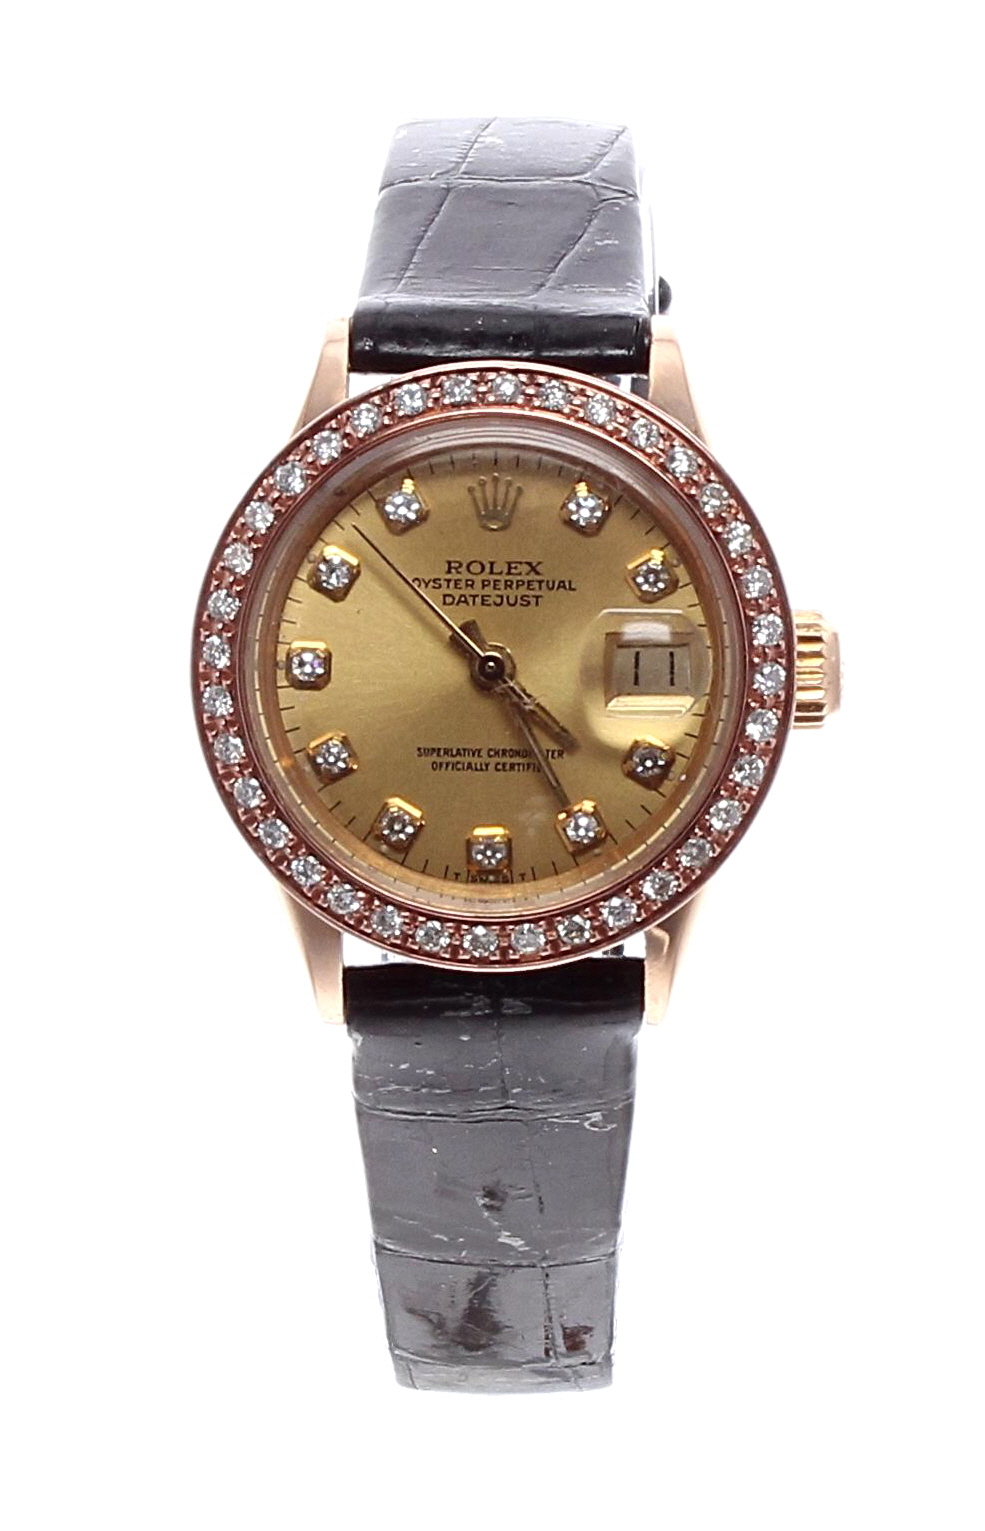 Rolex Oyster Perpetual Datejust 18ct lady's wristwatch, ref. 6517, circa 1971, serial no. 291xxxx,